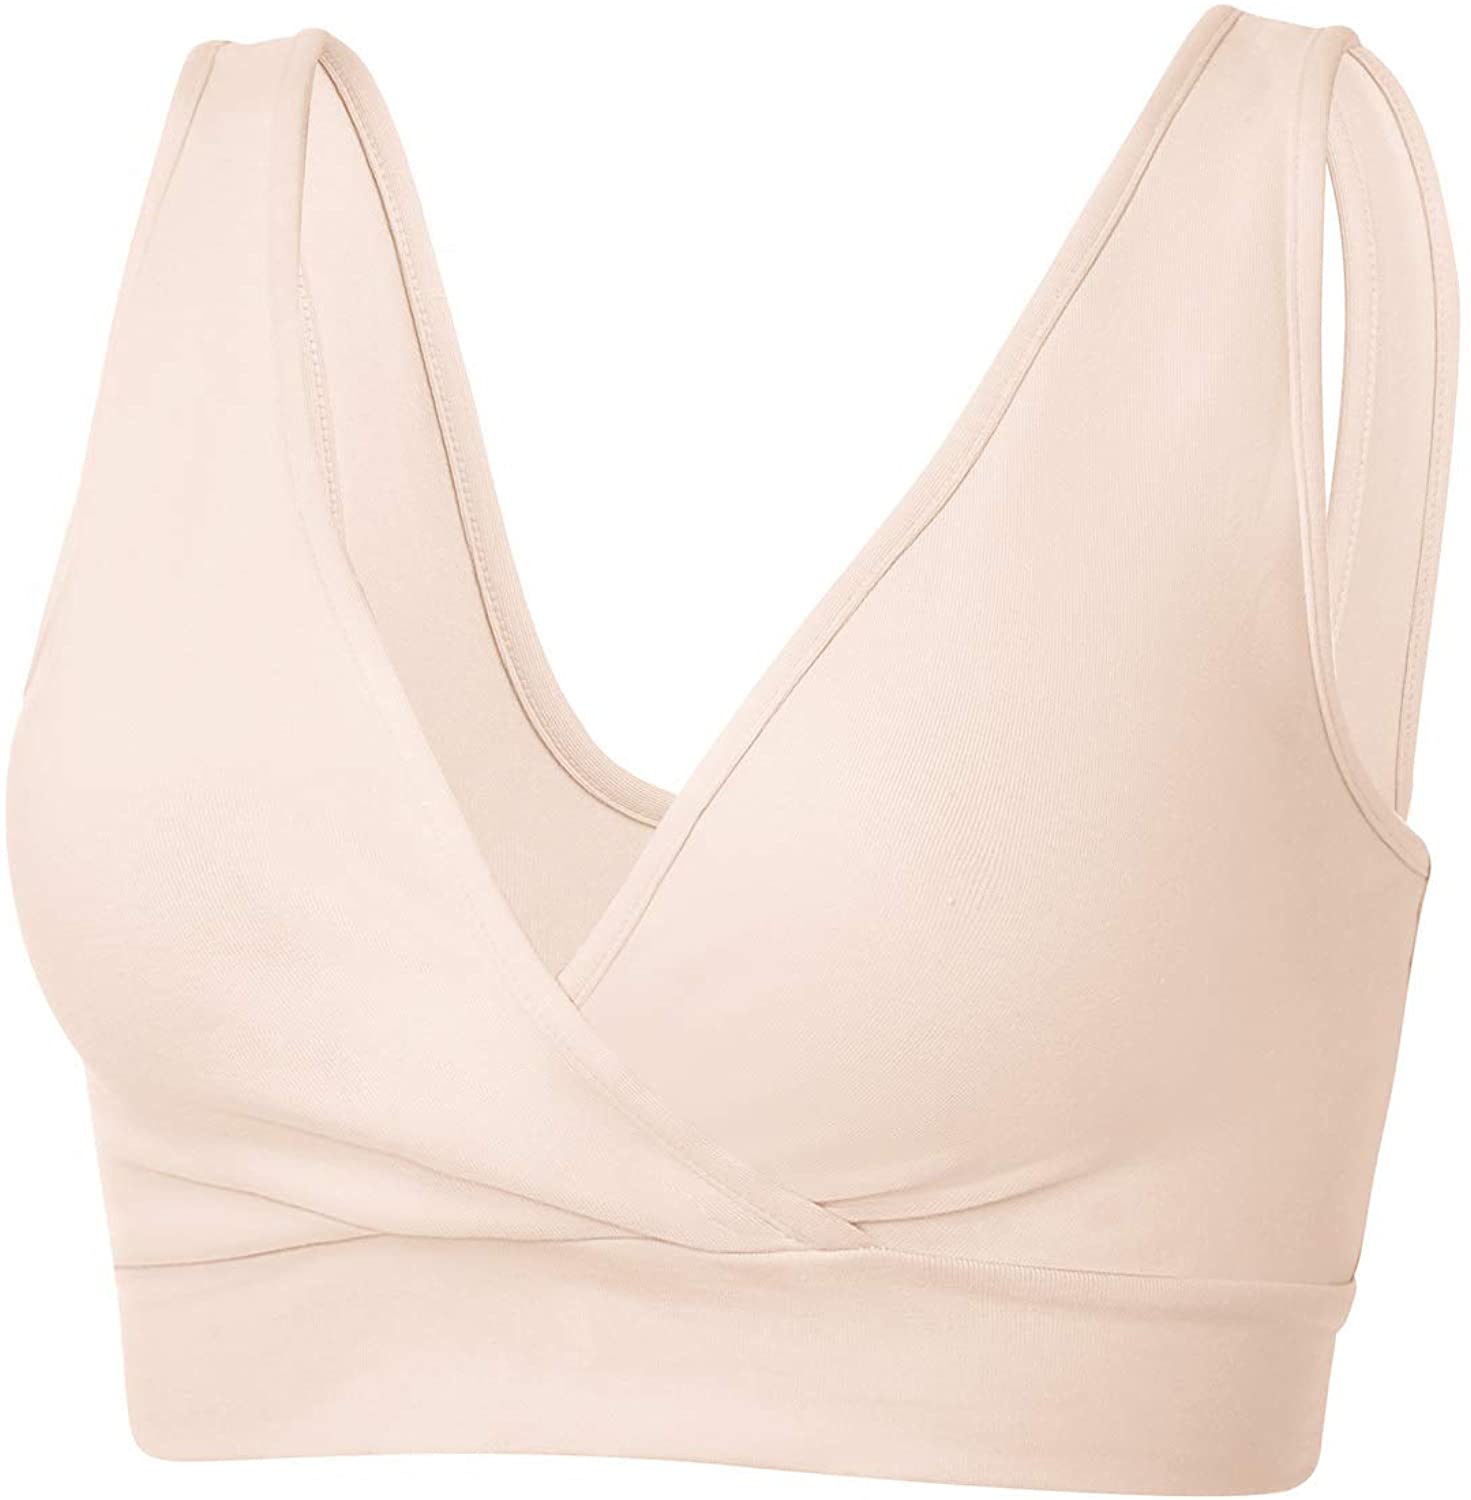 Gratlin Women's Soft Cotton Plus Size Nursing Sleep Bra for Breastfeeding  Beige X-Large - (38DD, 40C, 40D) at  Women's Clothing store